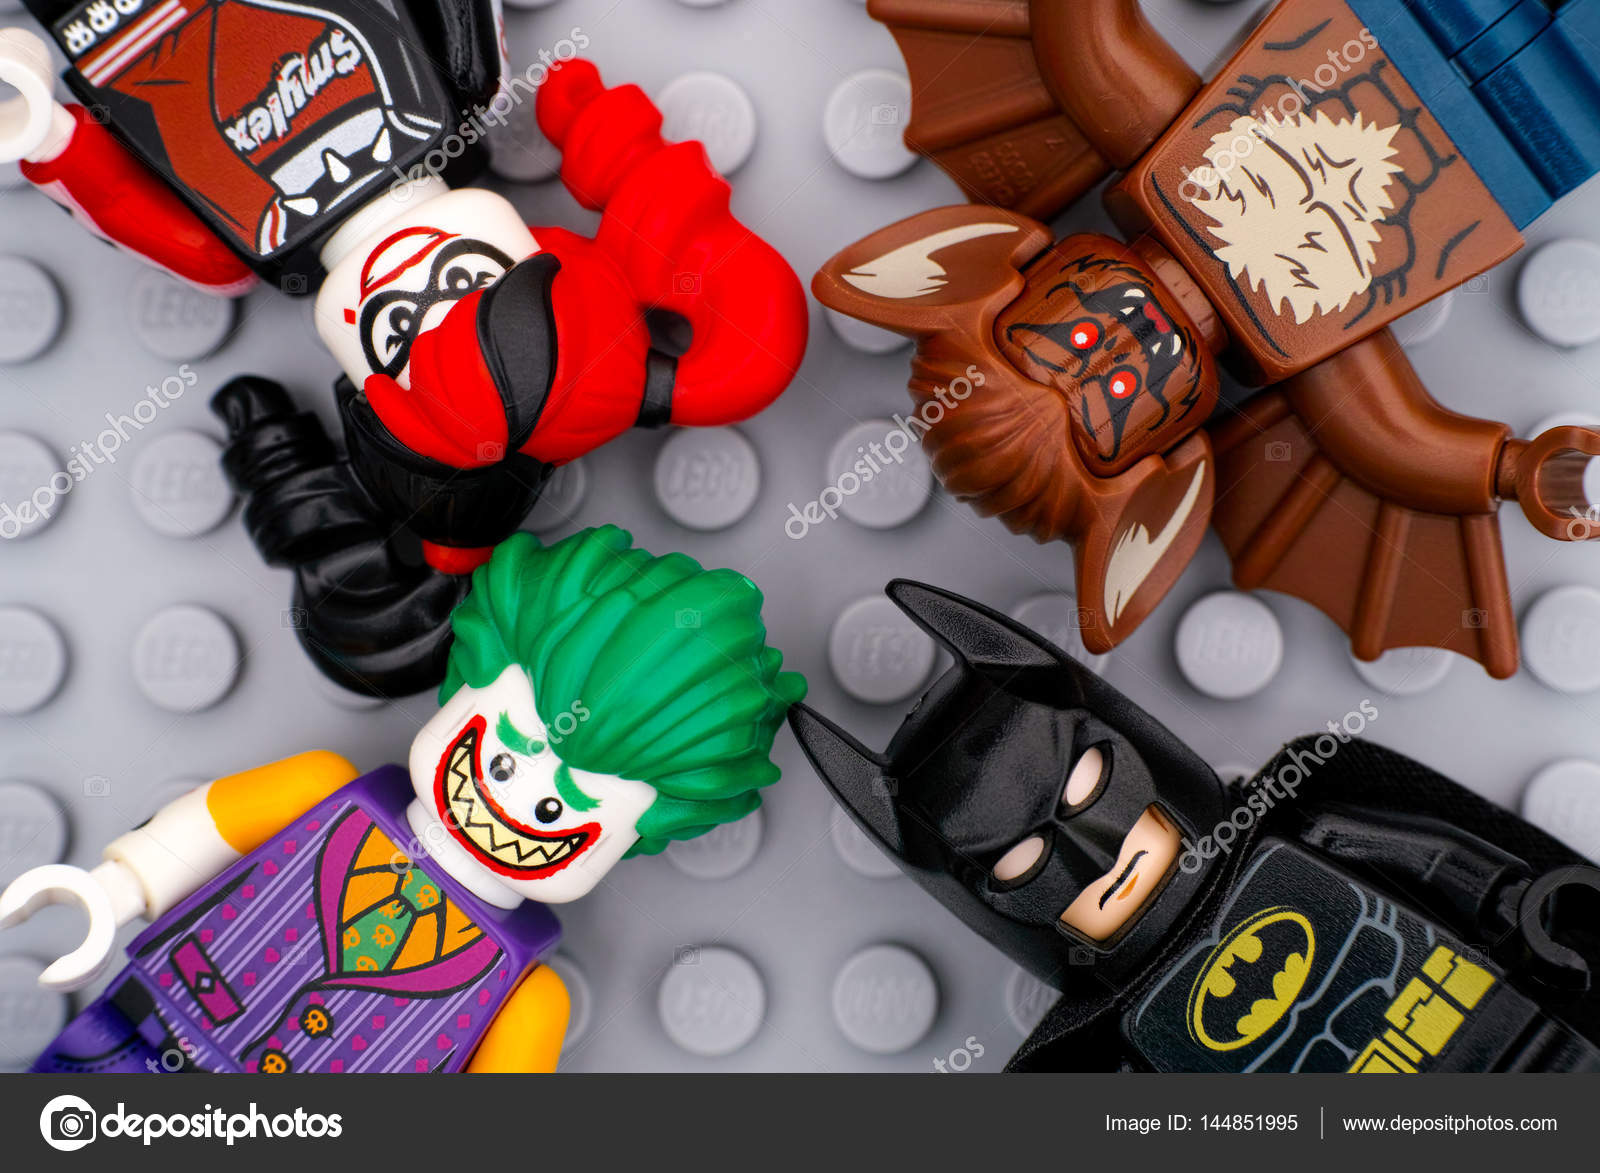 Pictures : lego joker | Lego minifigures - Batman, The Joker, Harley ...